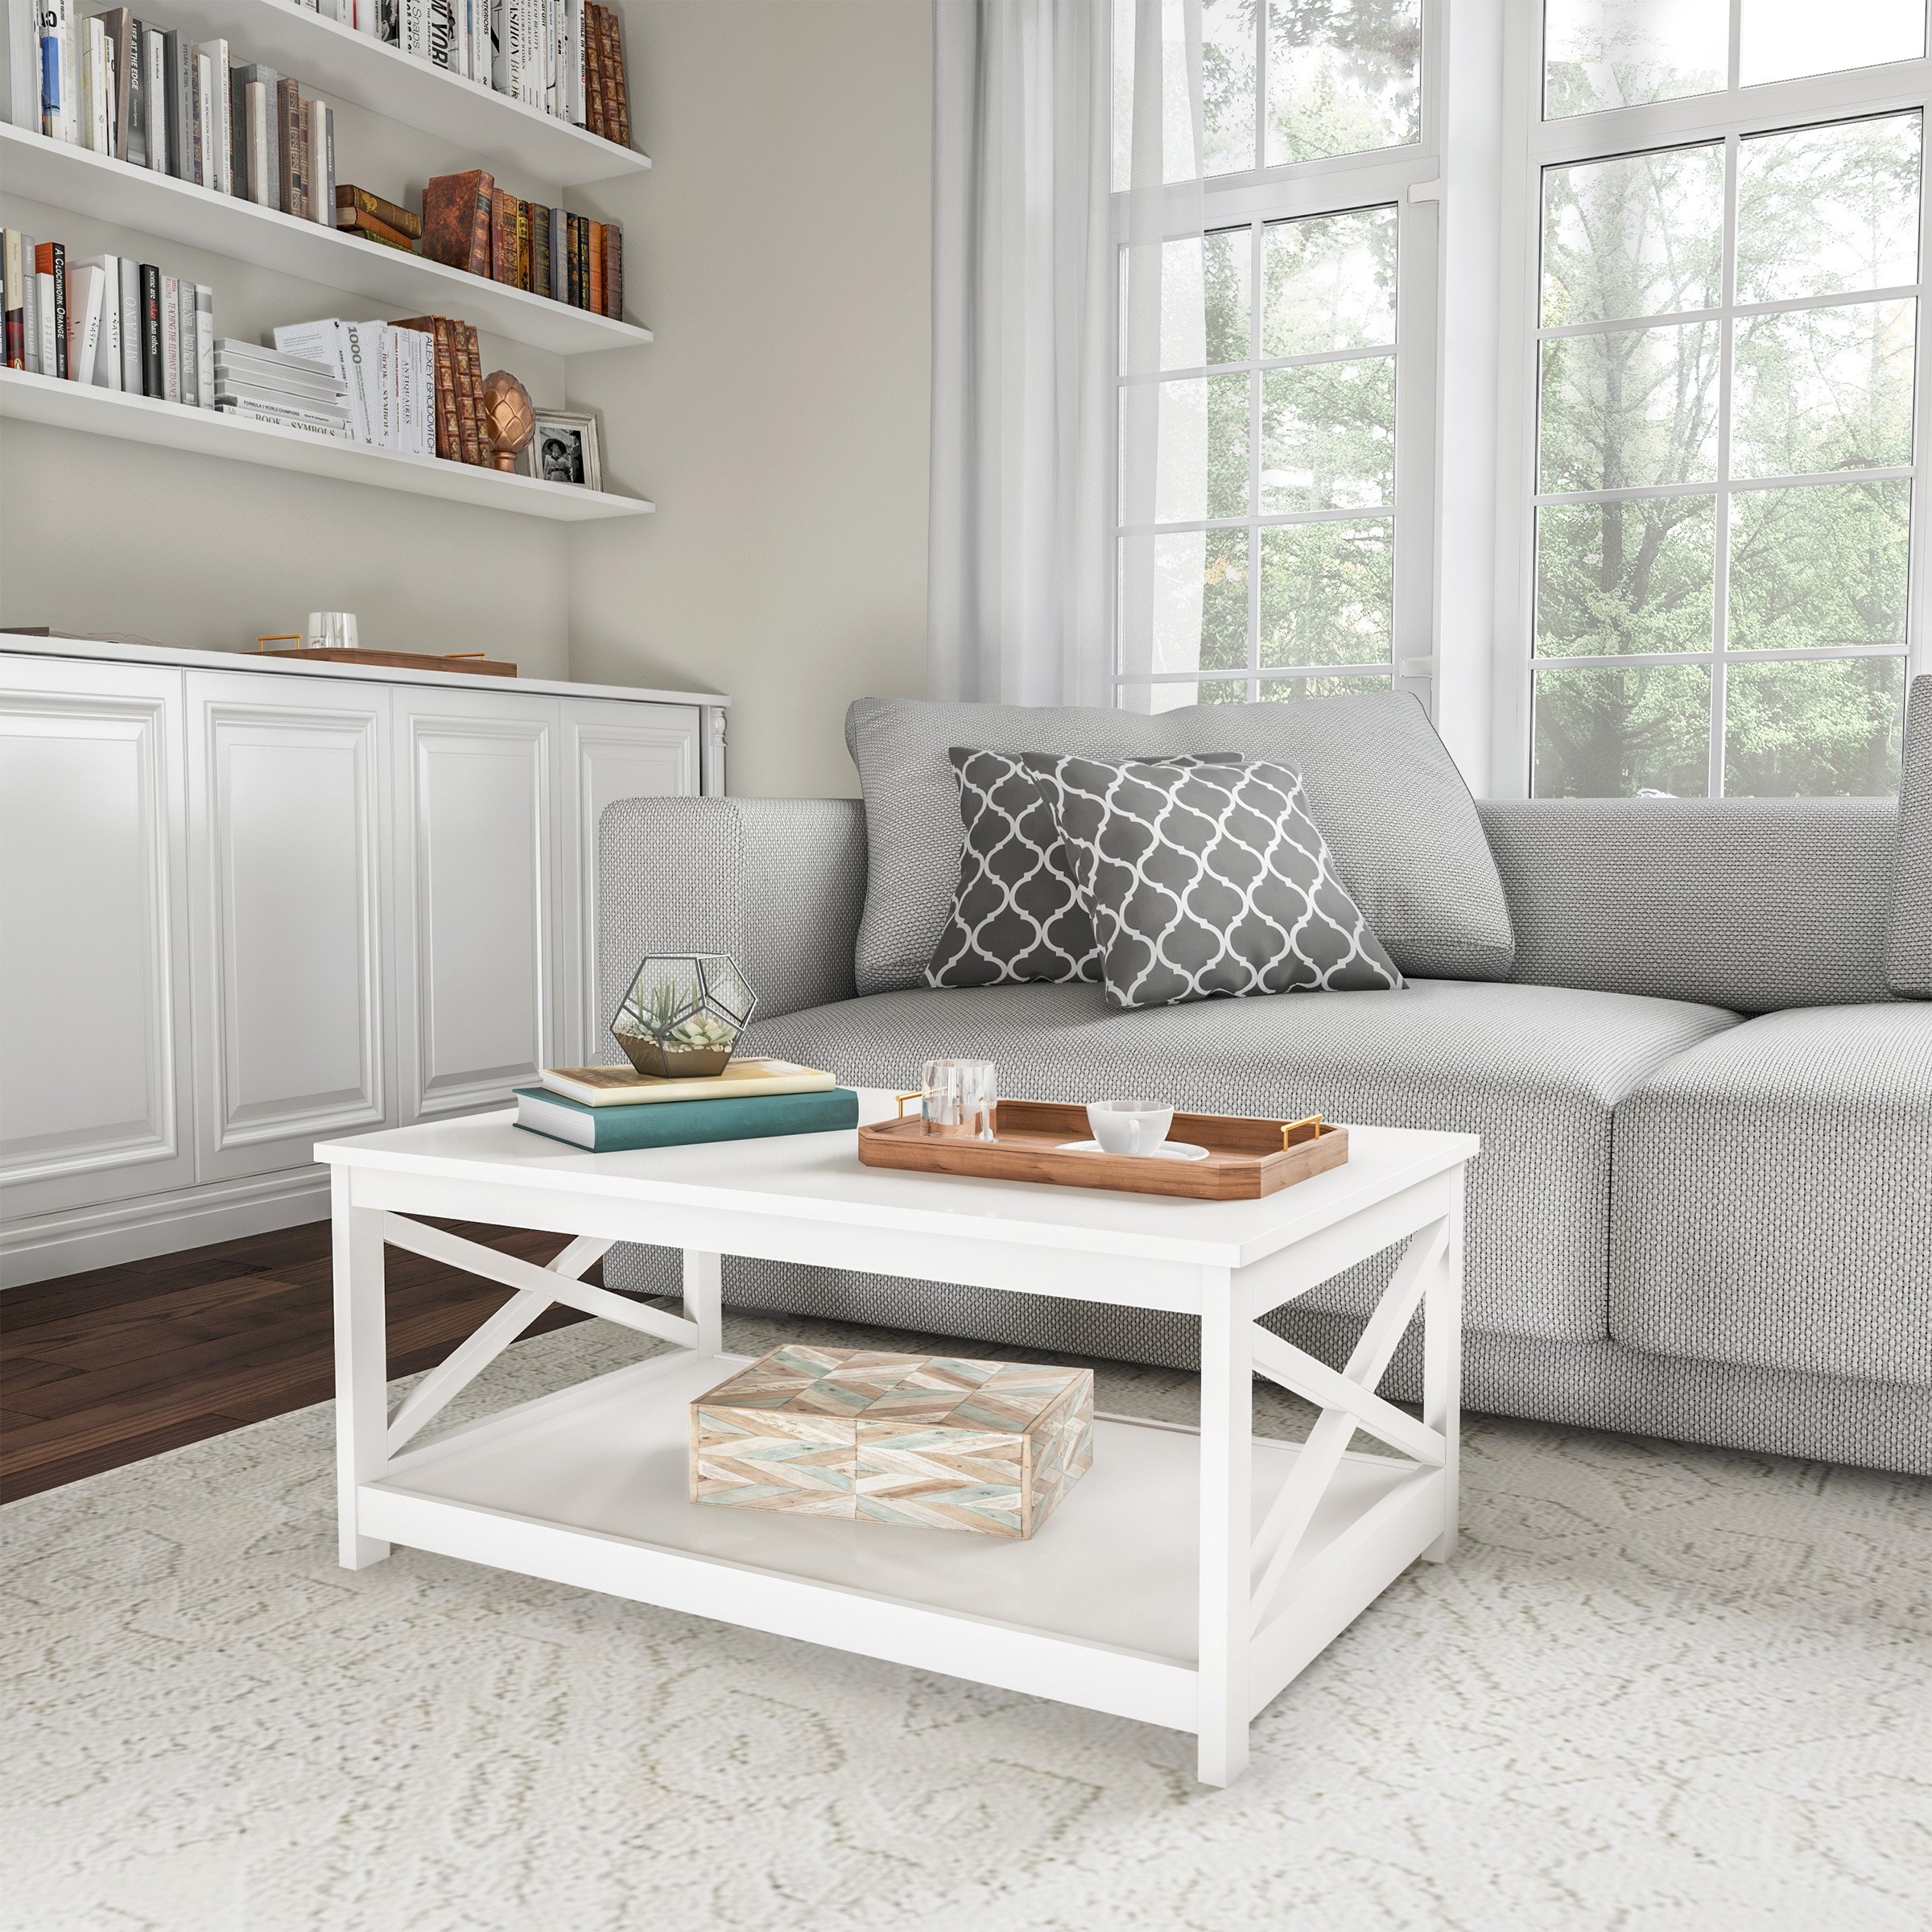 Coffee Table- White Wood, Low Profile & X-Leg Design- 2 Tier Modern Sofa Table, Living Room Furniture